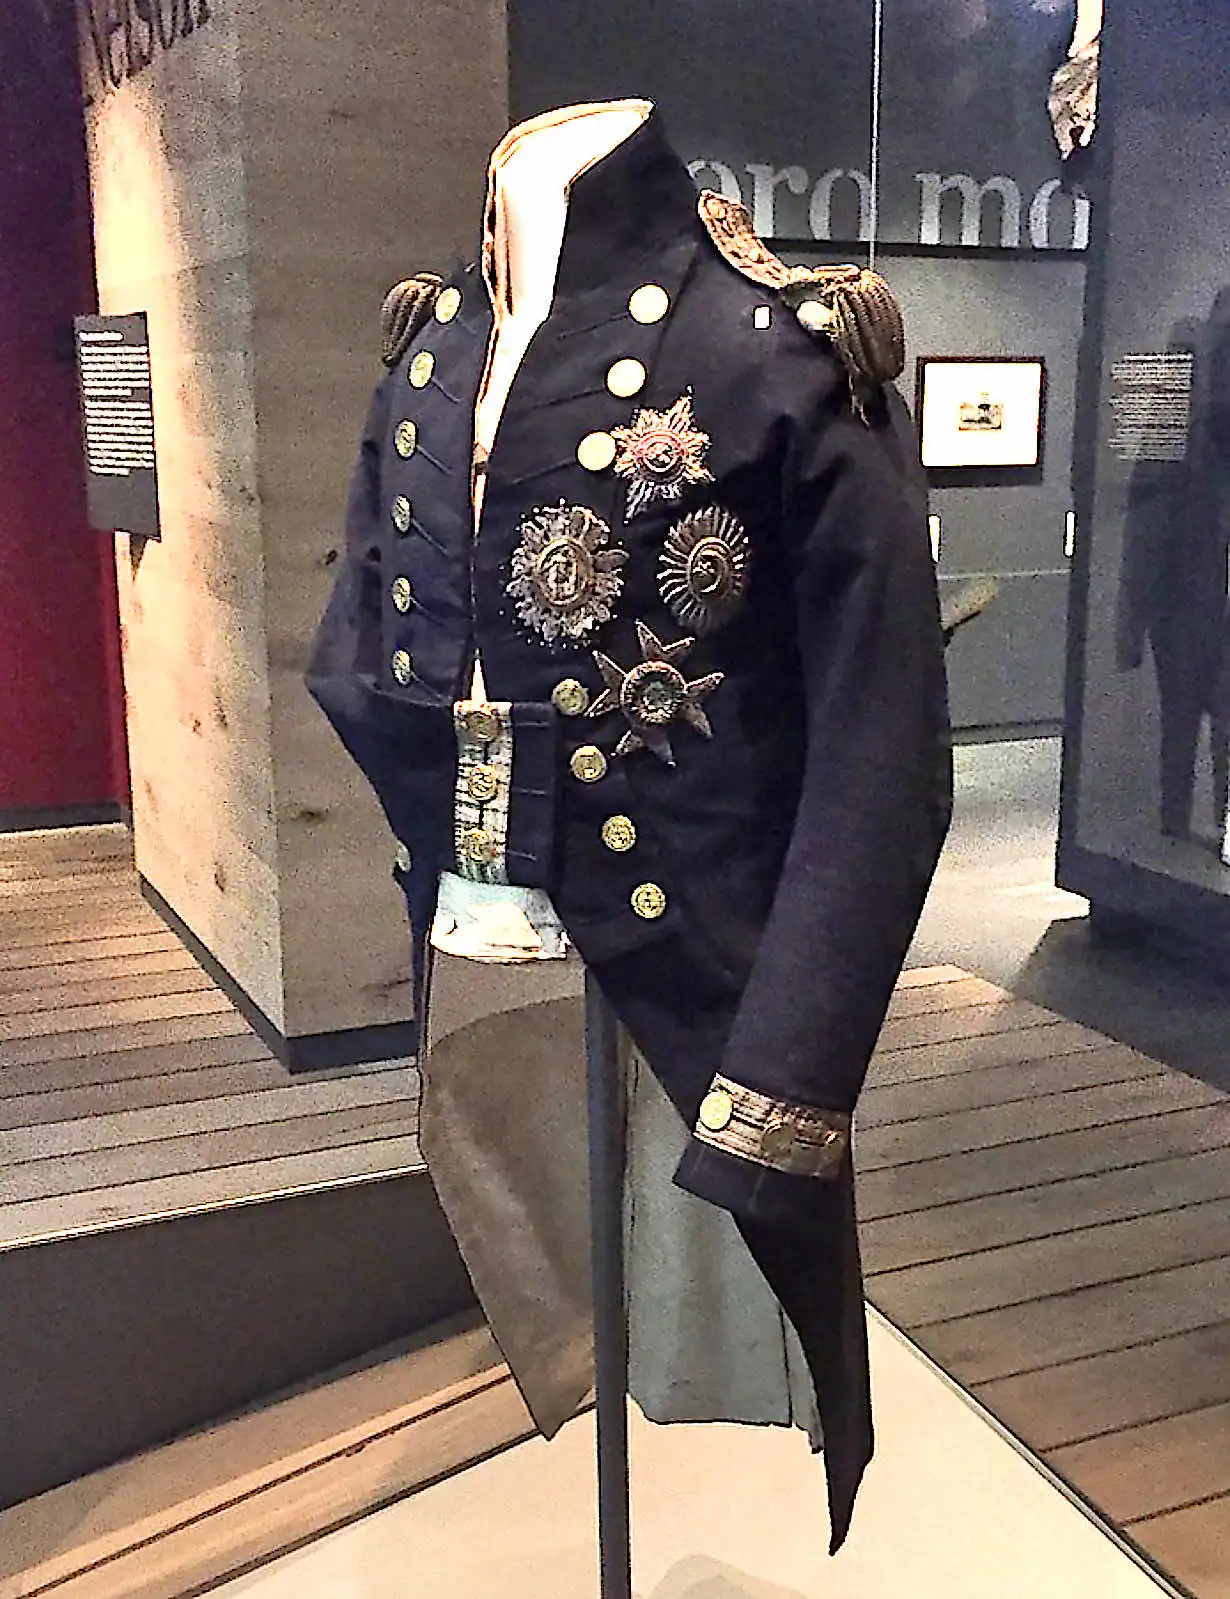 Admiral Nelson’s uniform from the Battle of Trafalgar